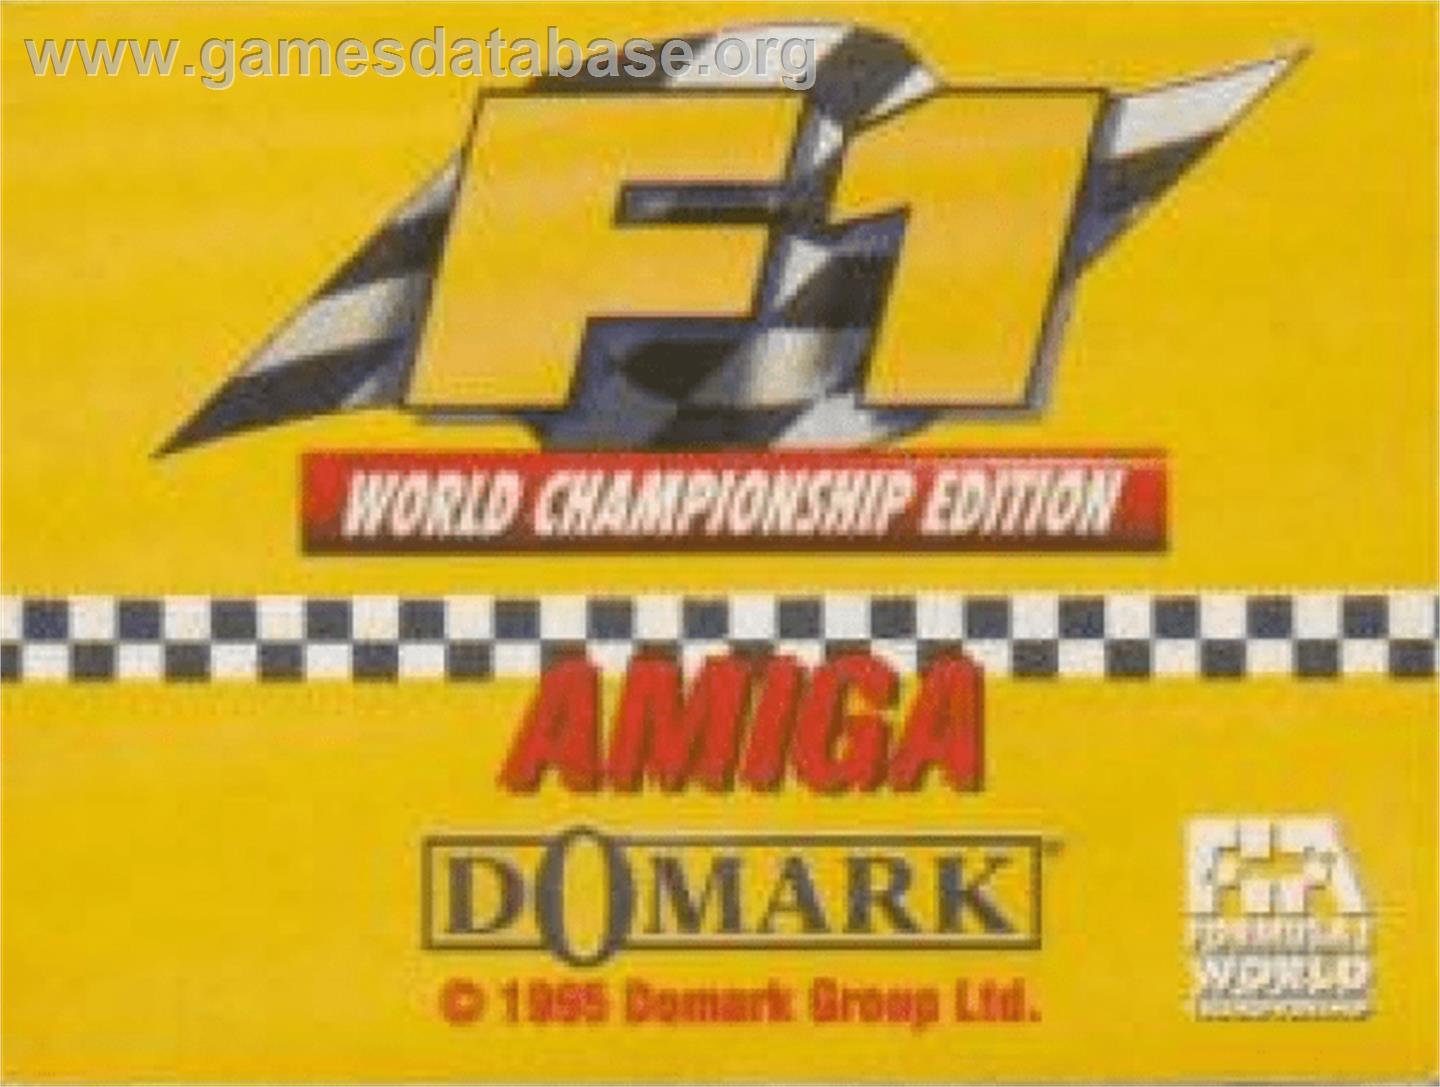 F1 World Championship Edition - Commodore Amiga - Artwork - Cartridge Top